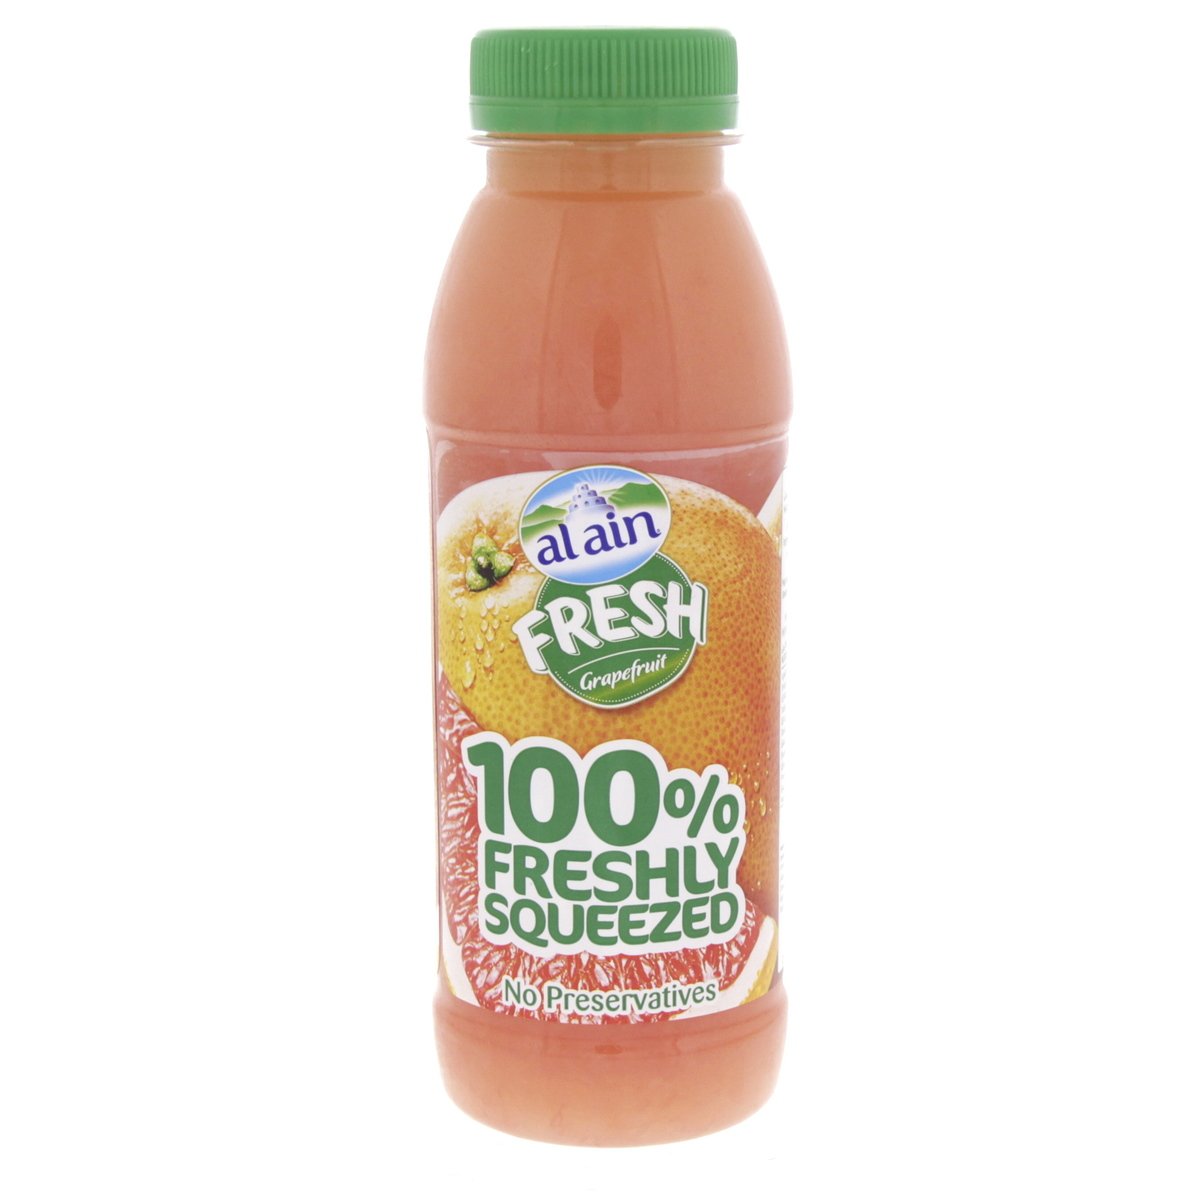 Al Ain Fresh Grape Fruit Juice 330 ml